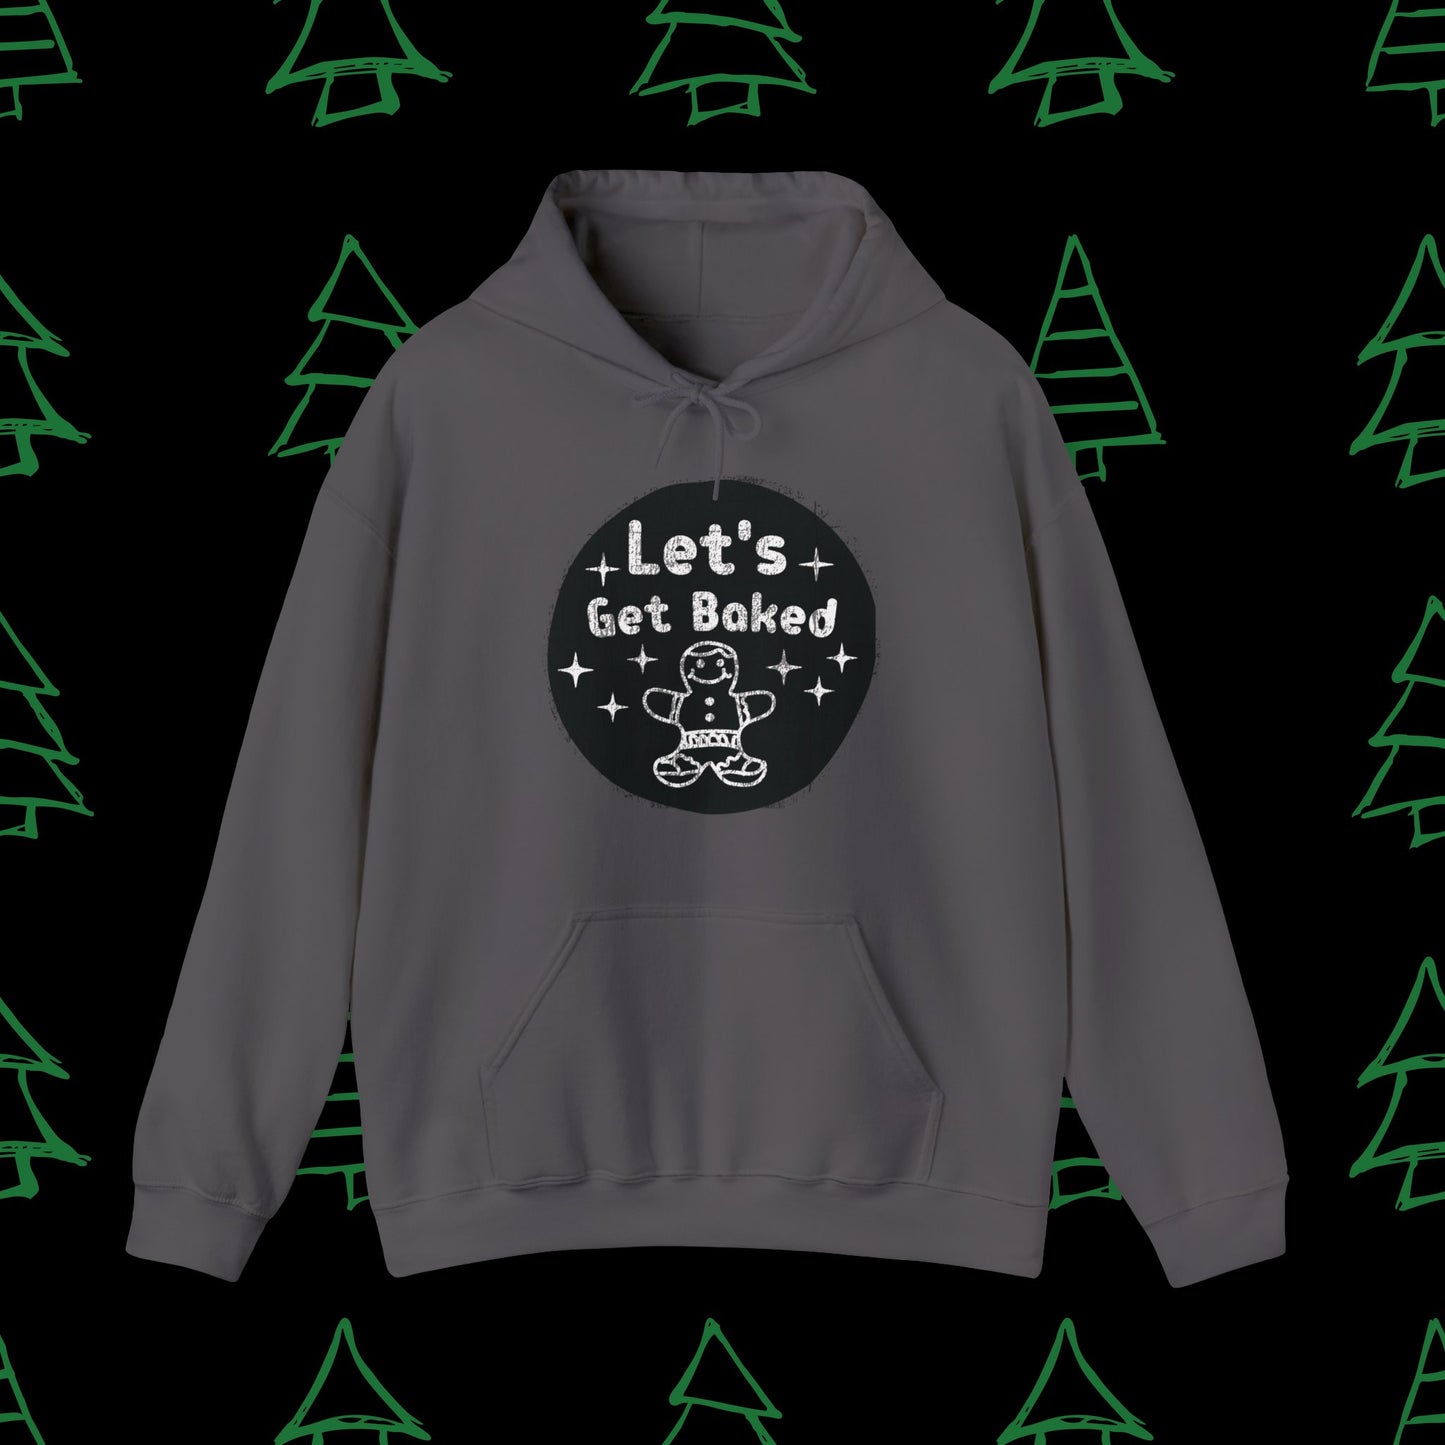 Christmas Hoodie - Let's Get Baked - Mens Christmas Shirts - Adult Christmas Hooded Sweatshirt Hooded Sweatshirt Graphic Avenue Charcoal Adult Small 